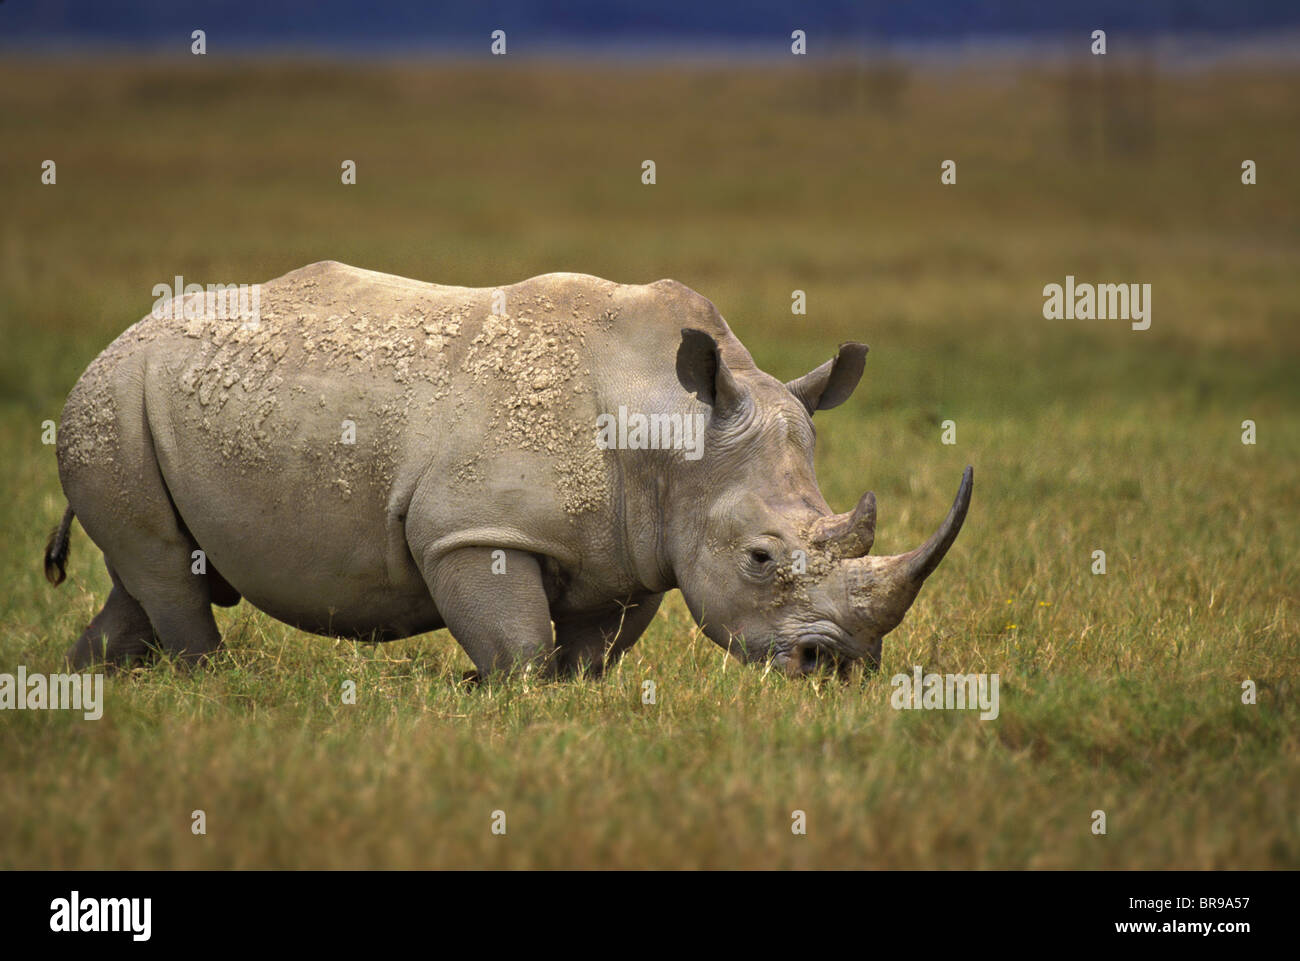 Africa Kenya Lake Nakuru National Park. A northern white rhinoceros considered Critically Endangered. walks across grasslands. Stock Photo